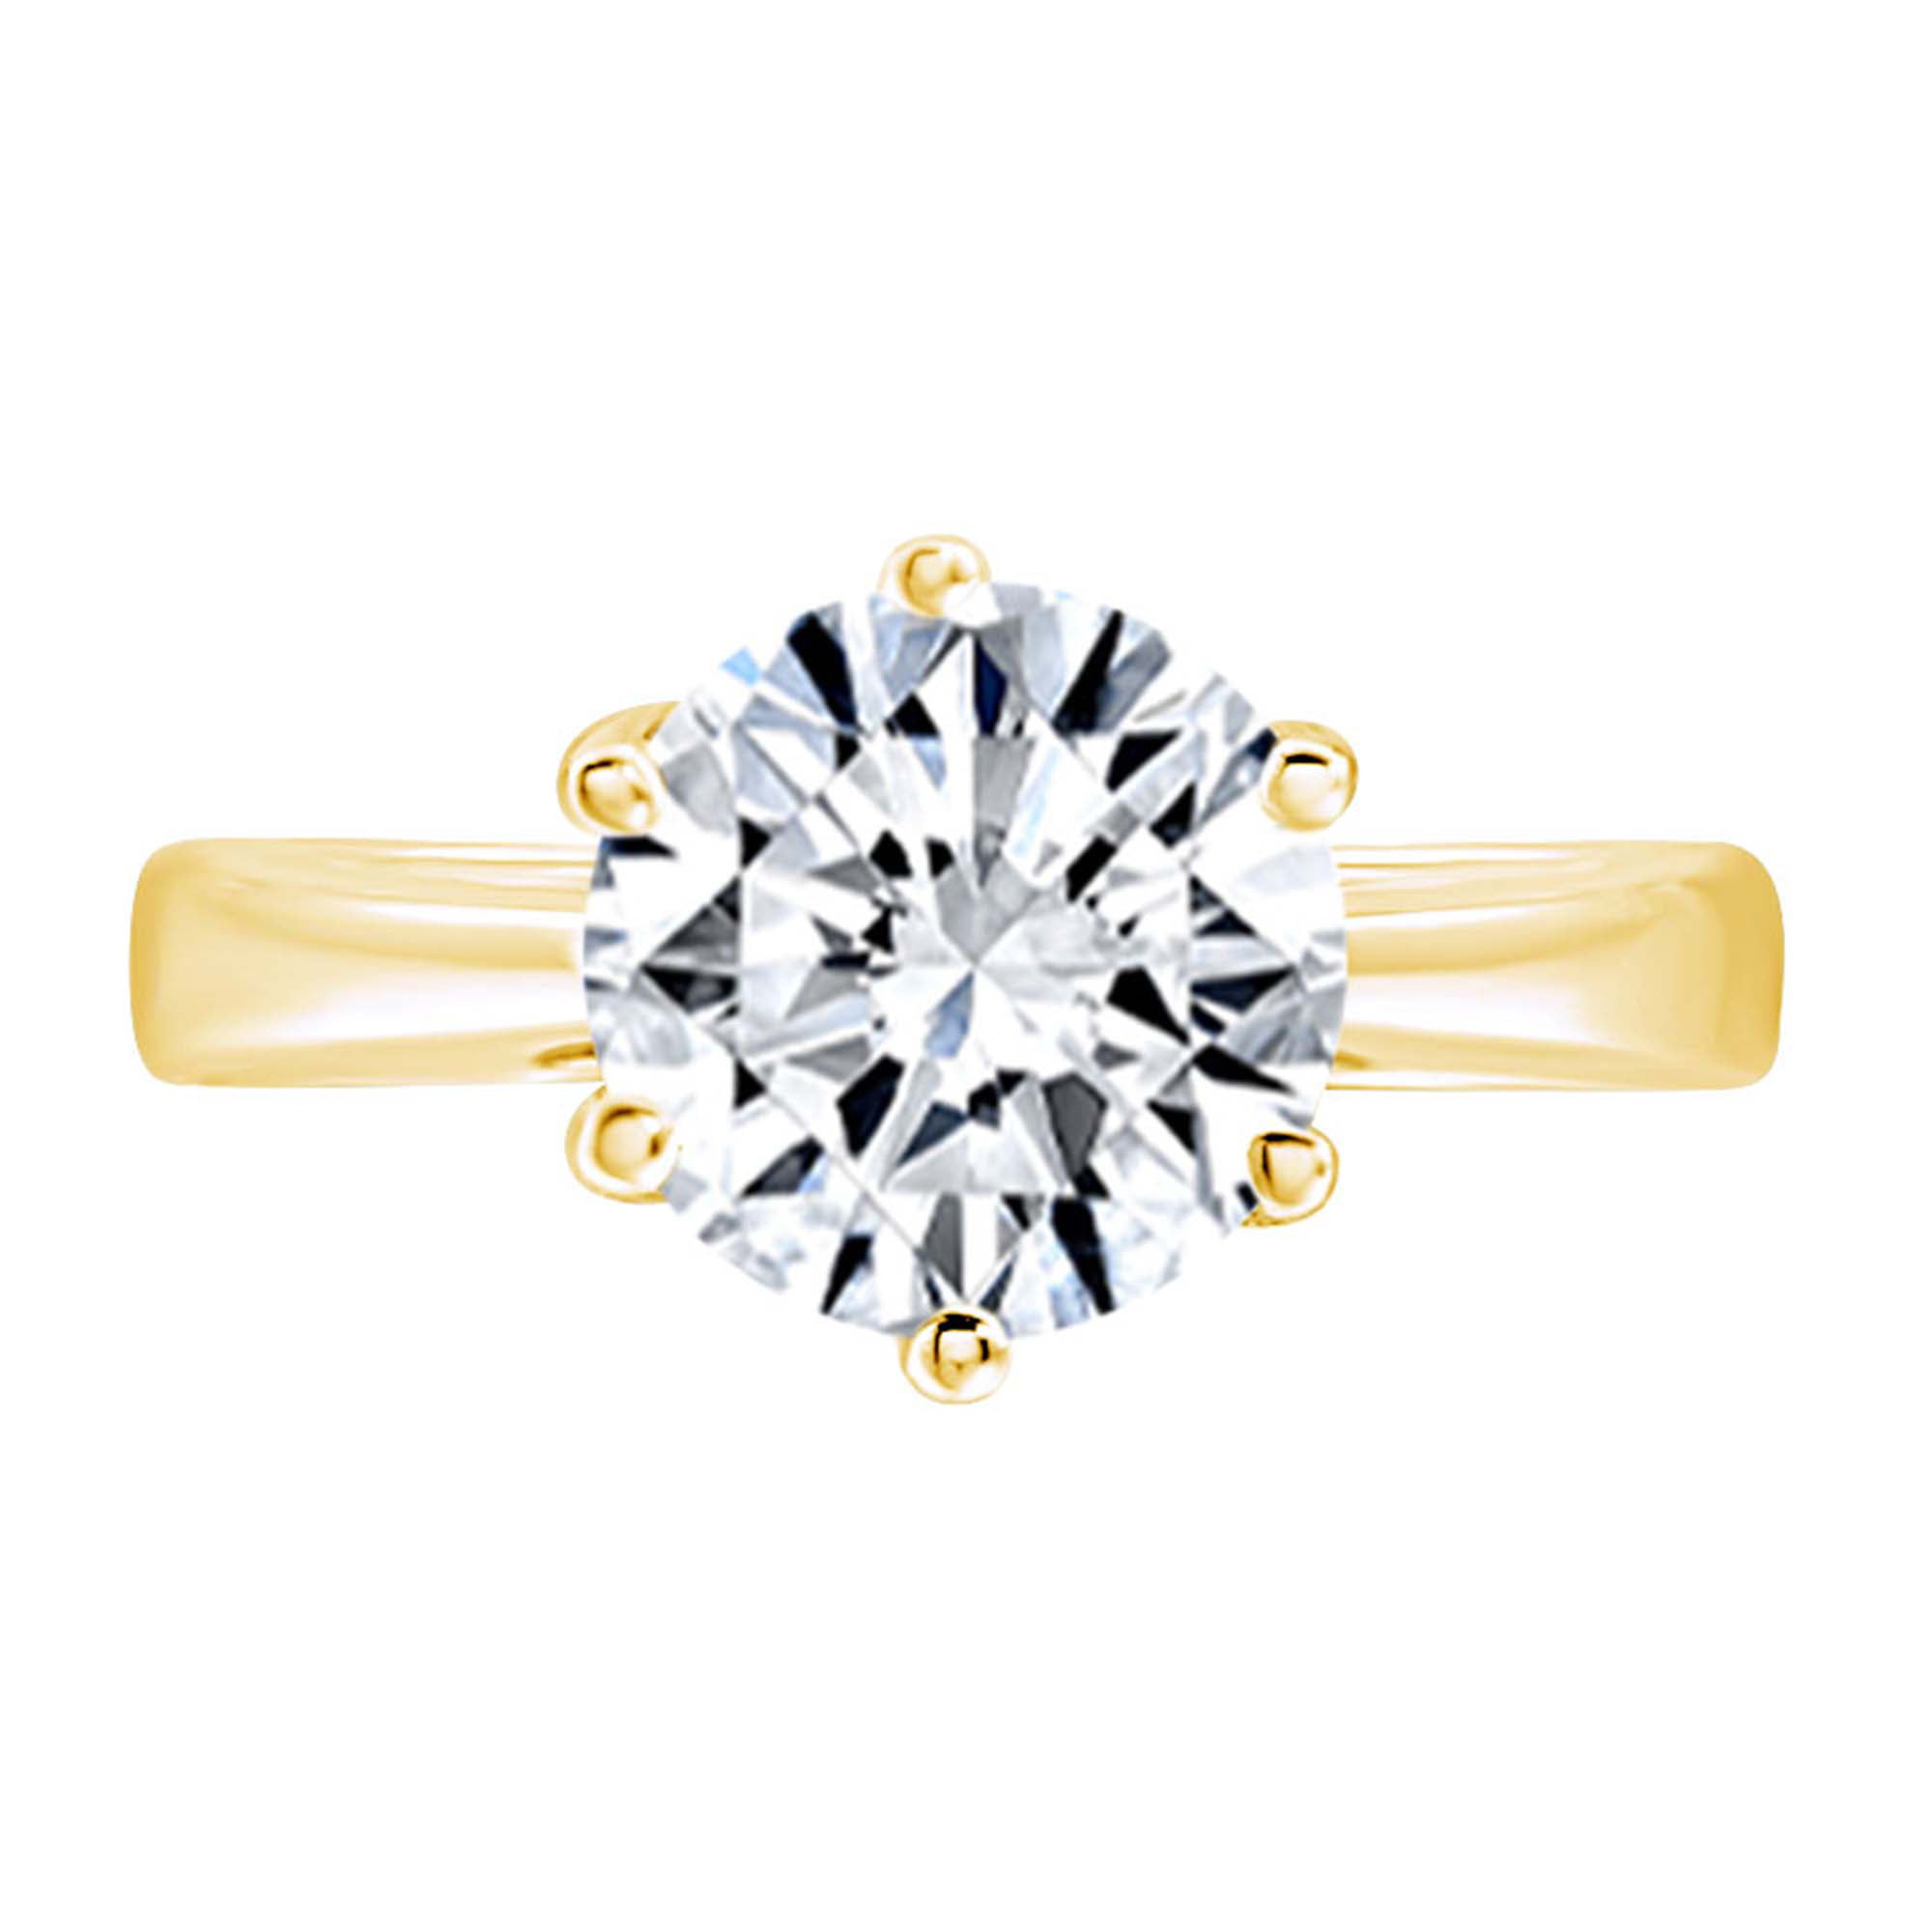 2.4 ct  Princess Cut Designer Genuine Flawless VVS1 Champagne Simulated Diamond 14K 18K Yellow Gold Three-Stone Ring